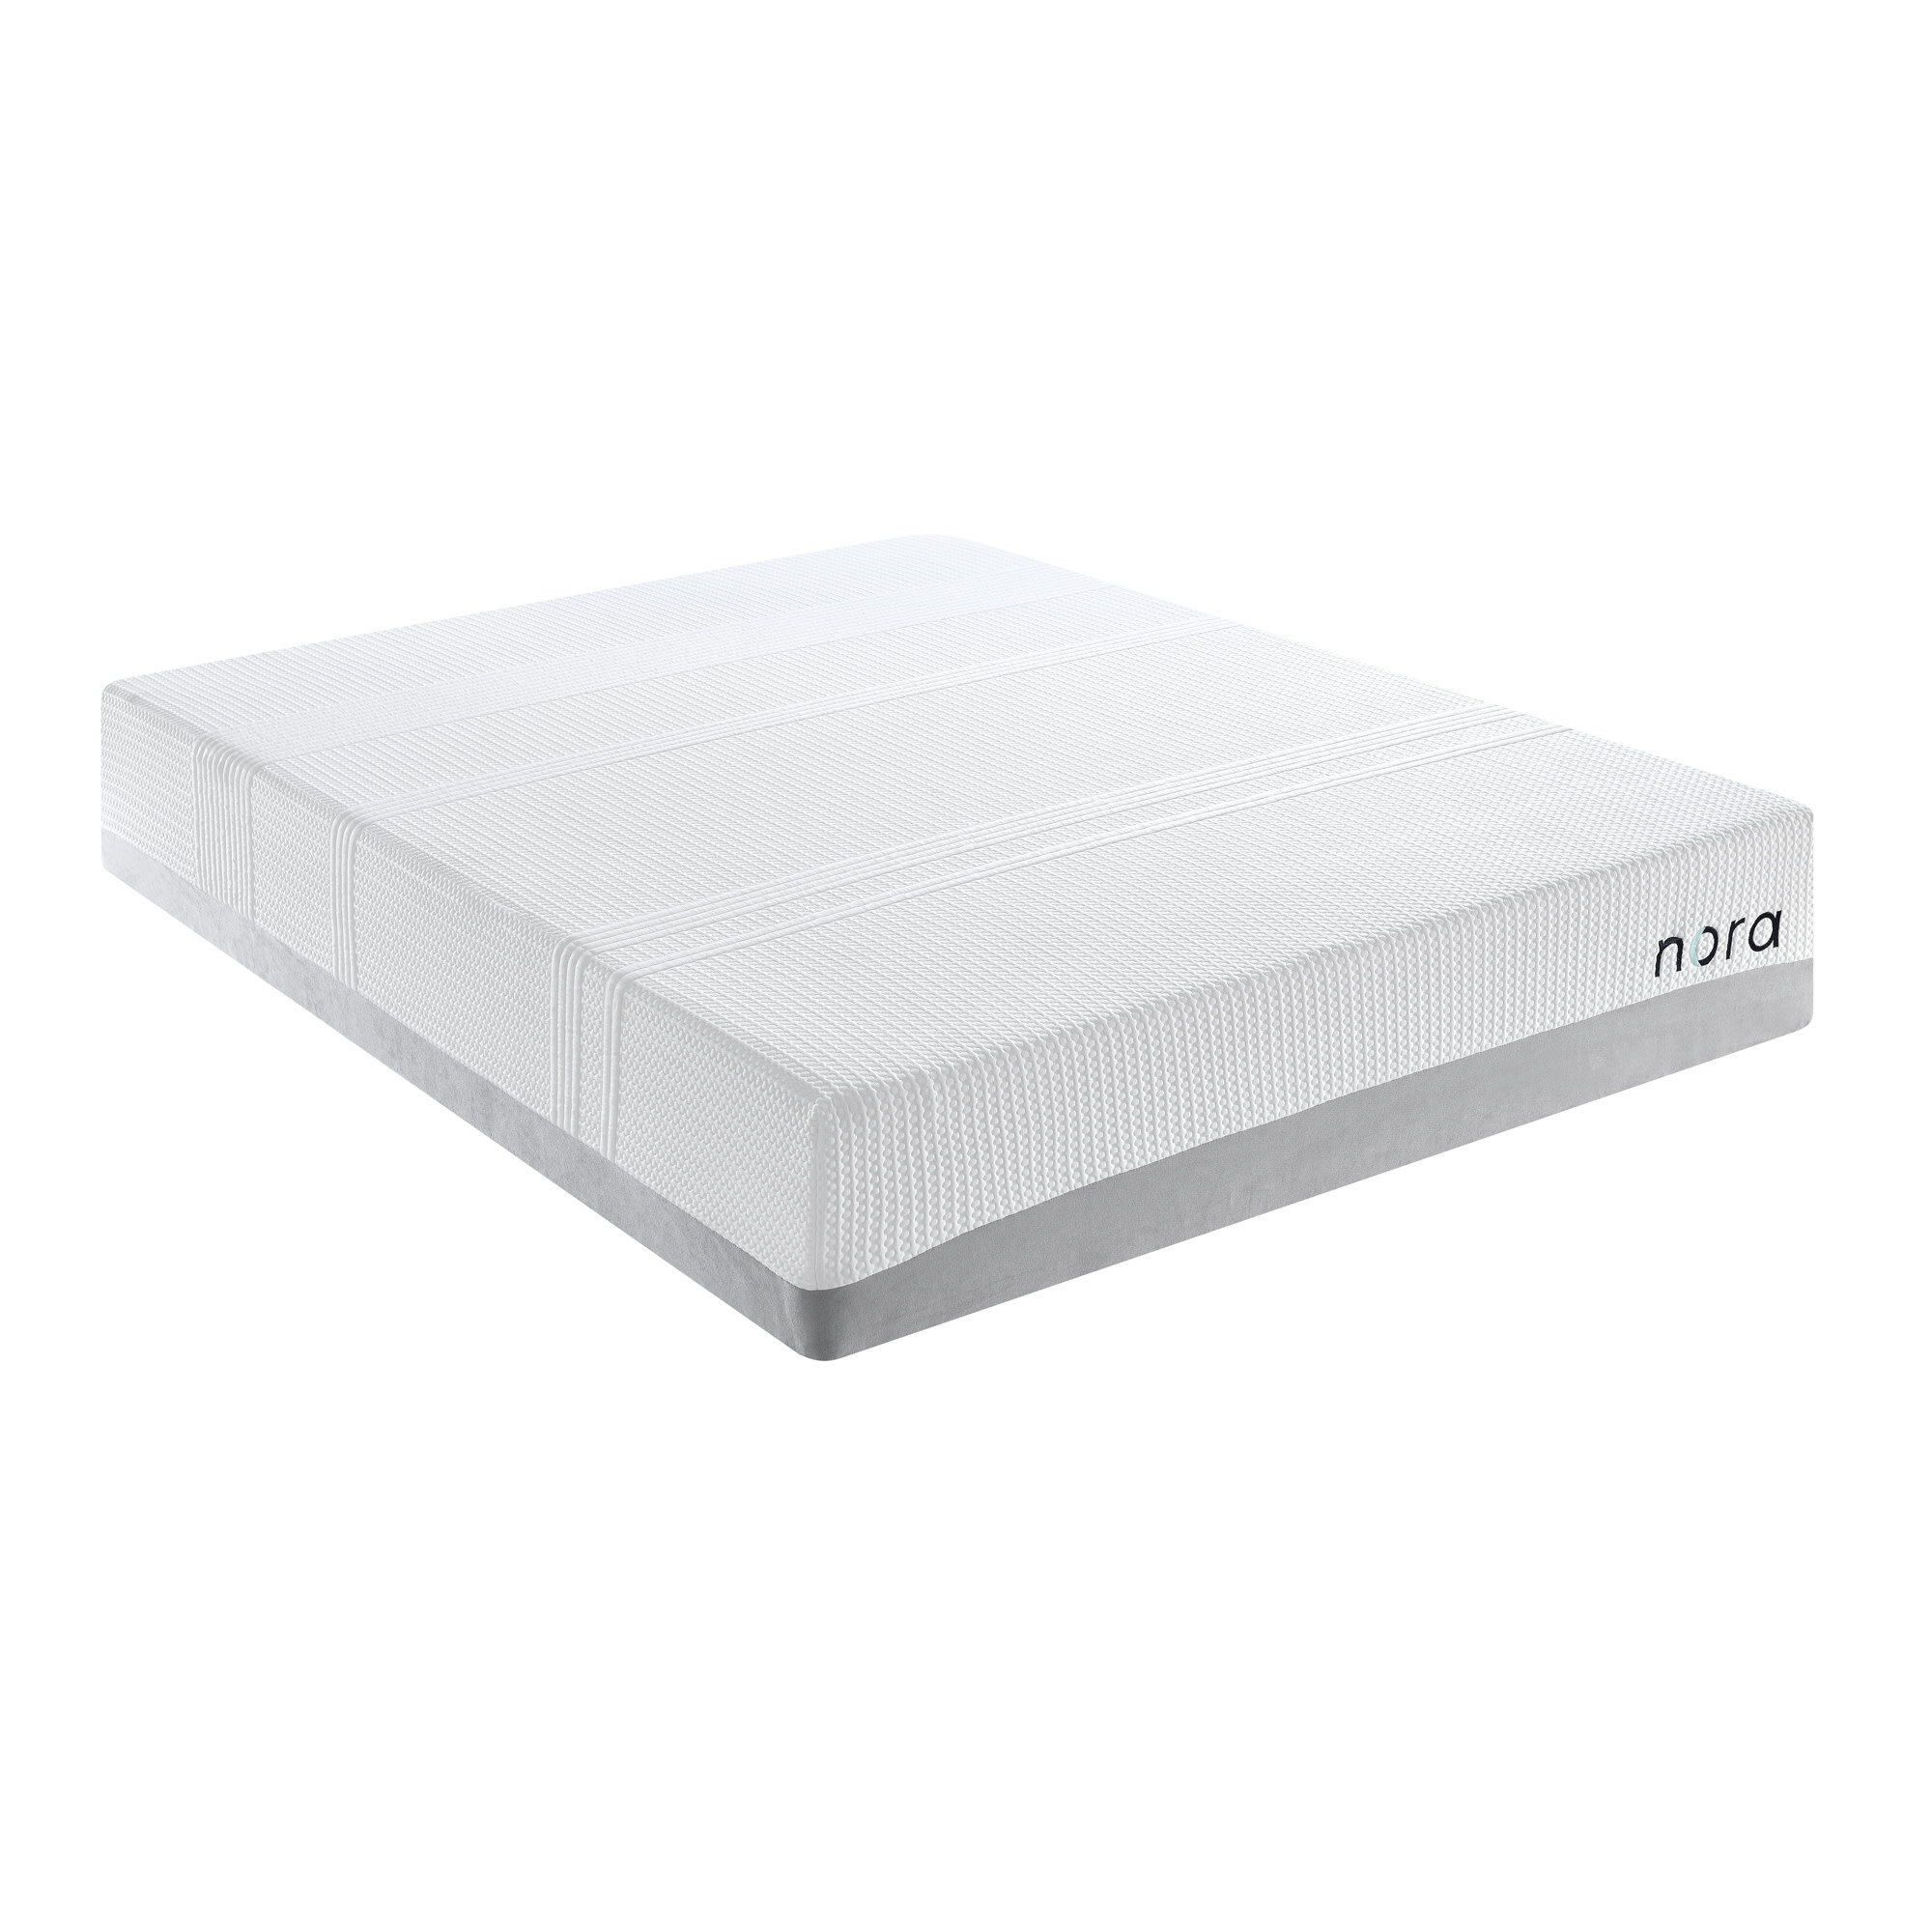 queen size memory foam mattress pad cover